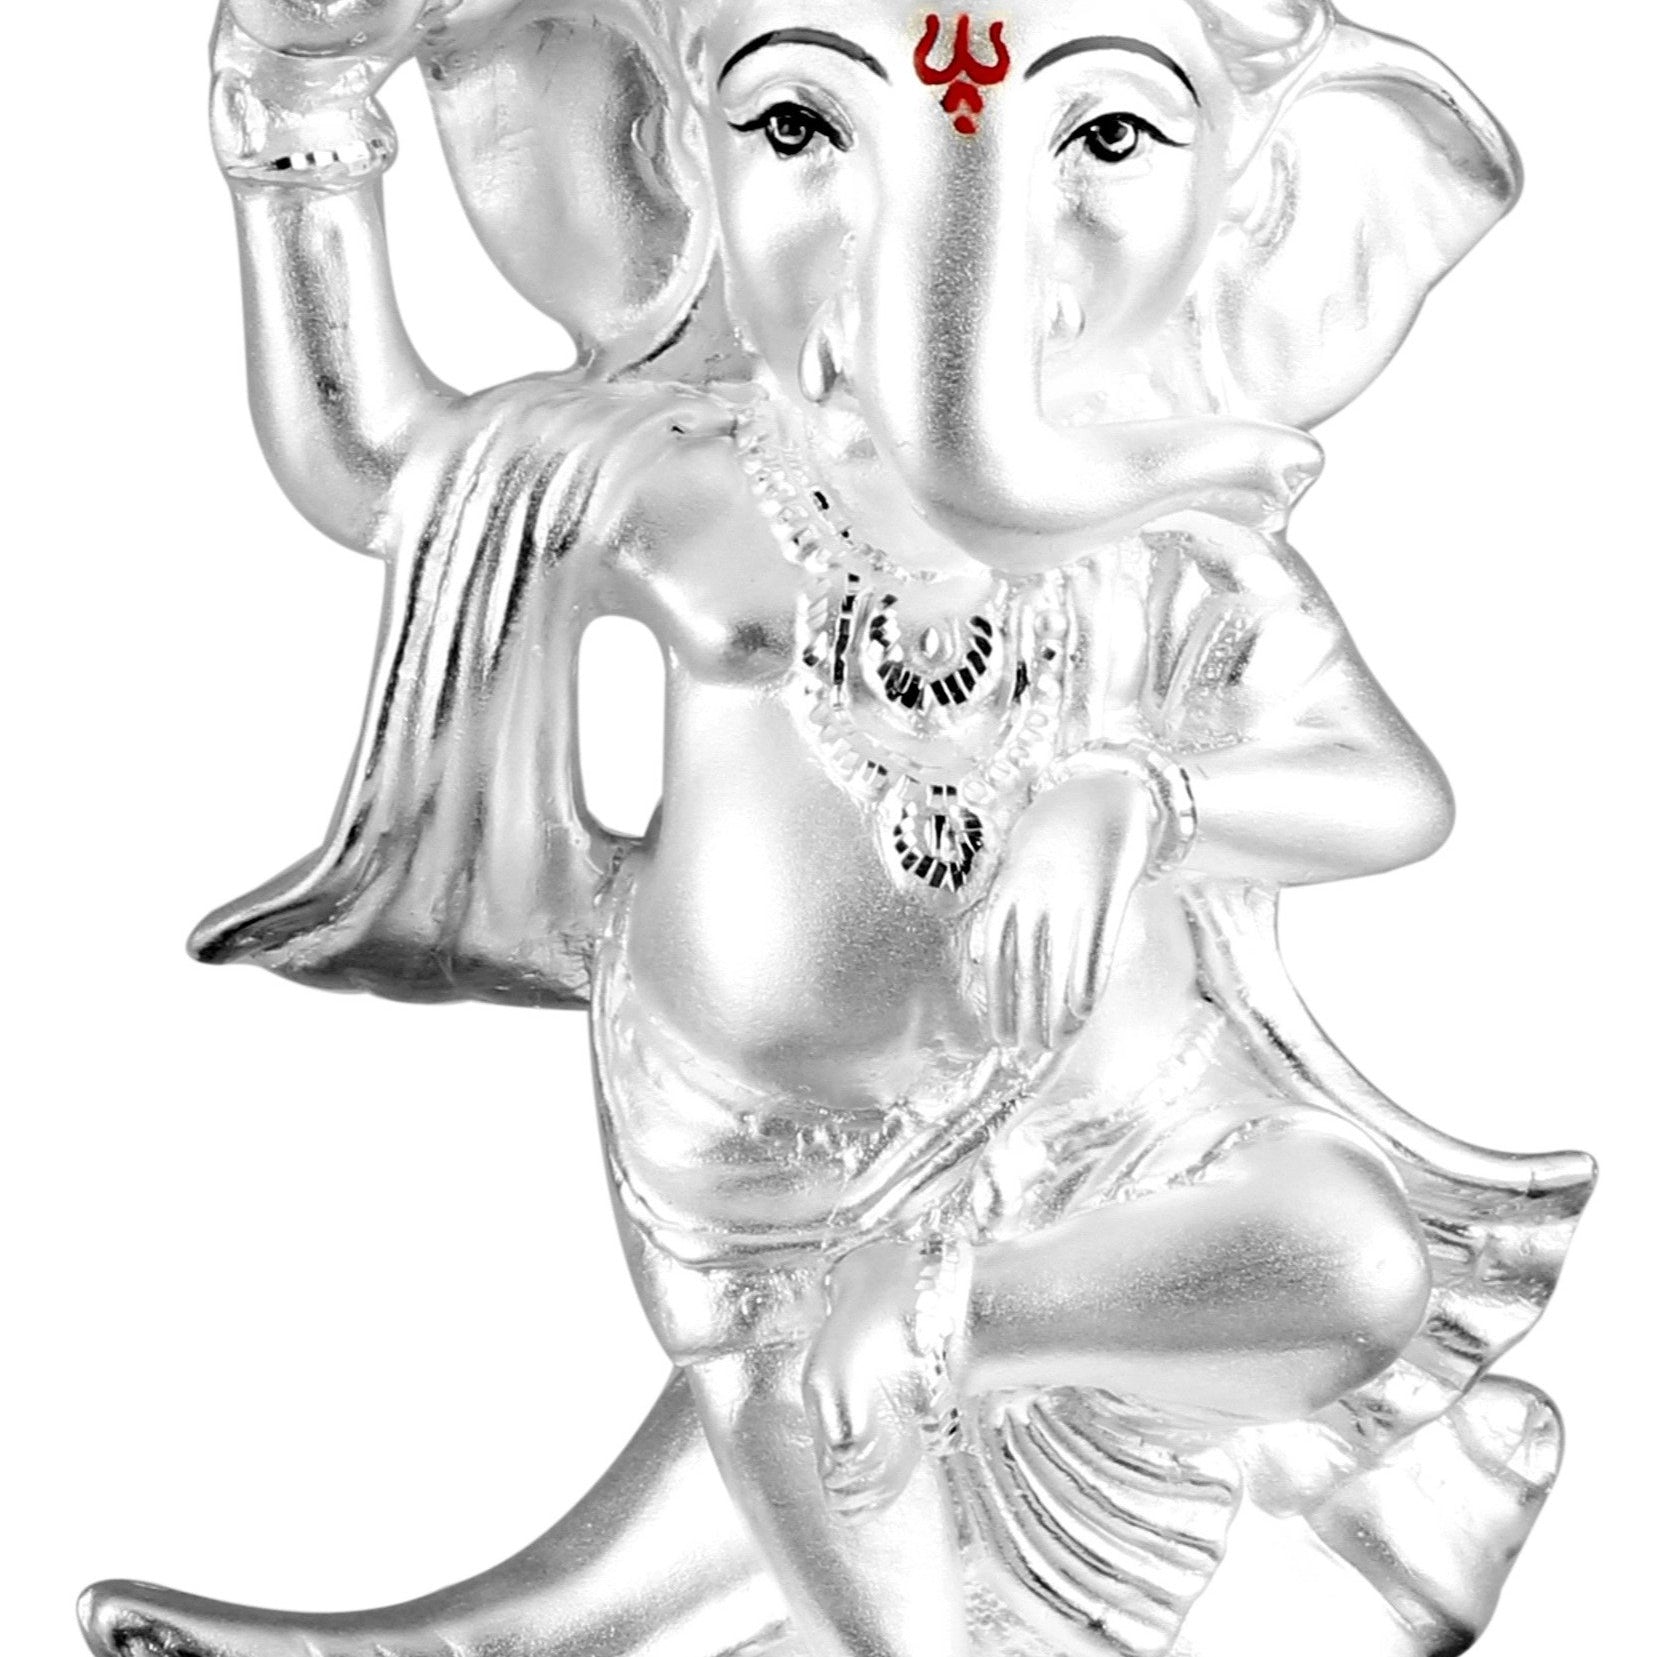 999 Pure Silver Standing Ganesha Idol By Krysaliis Isvara - Krign35 Idols